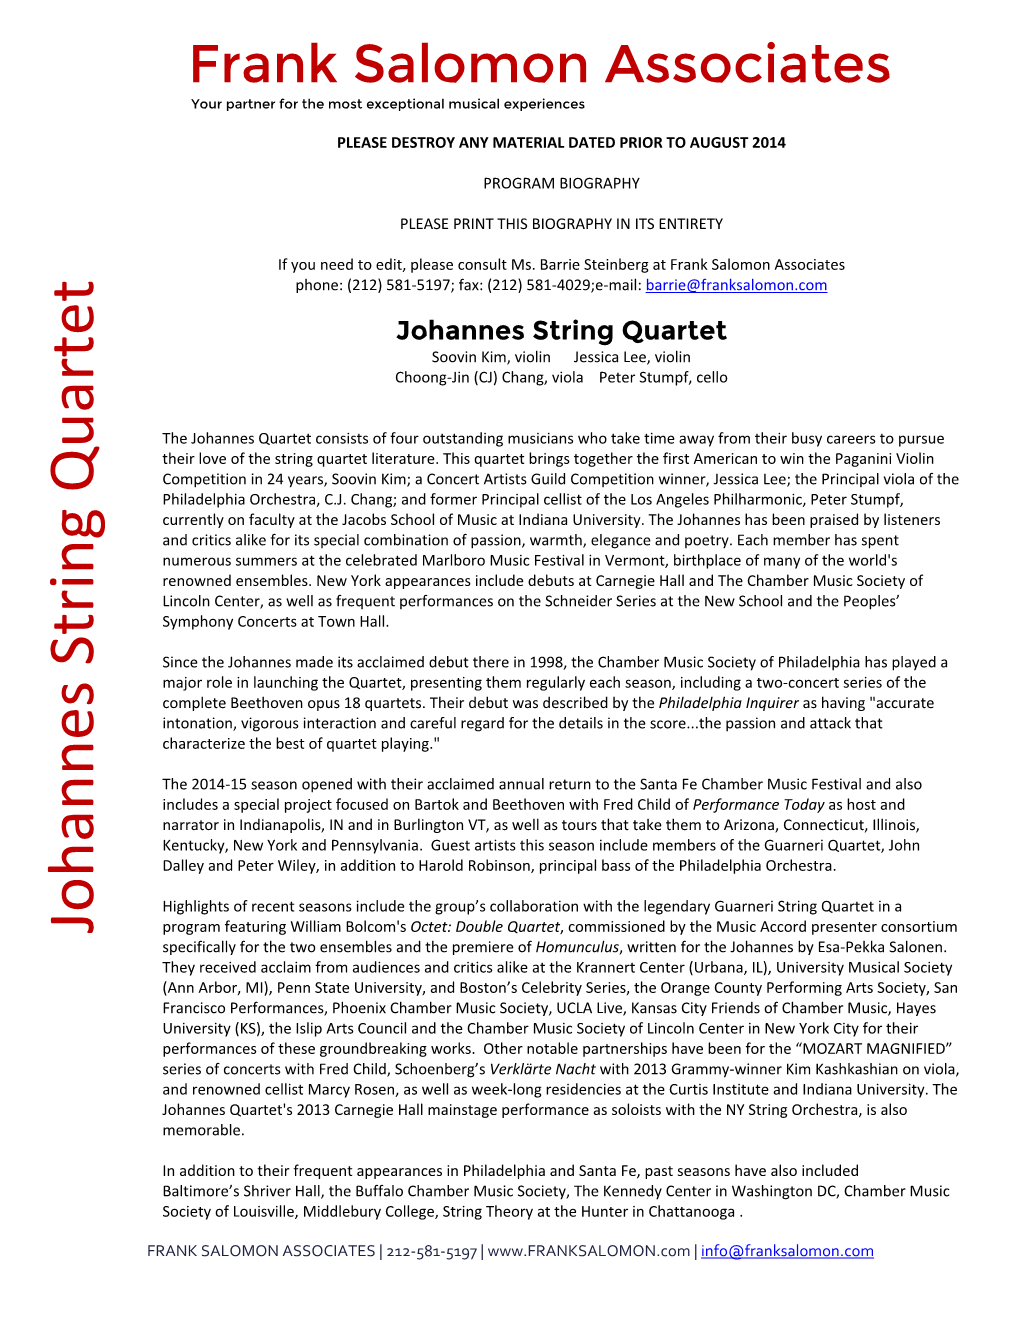 Johannes String Quartet